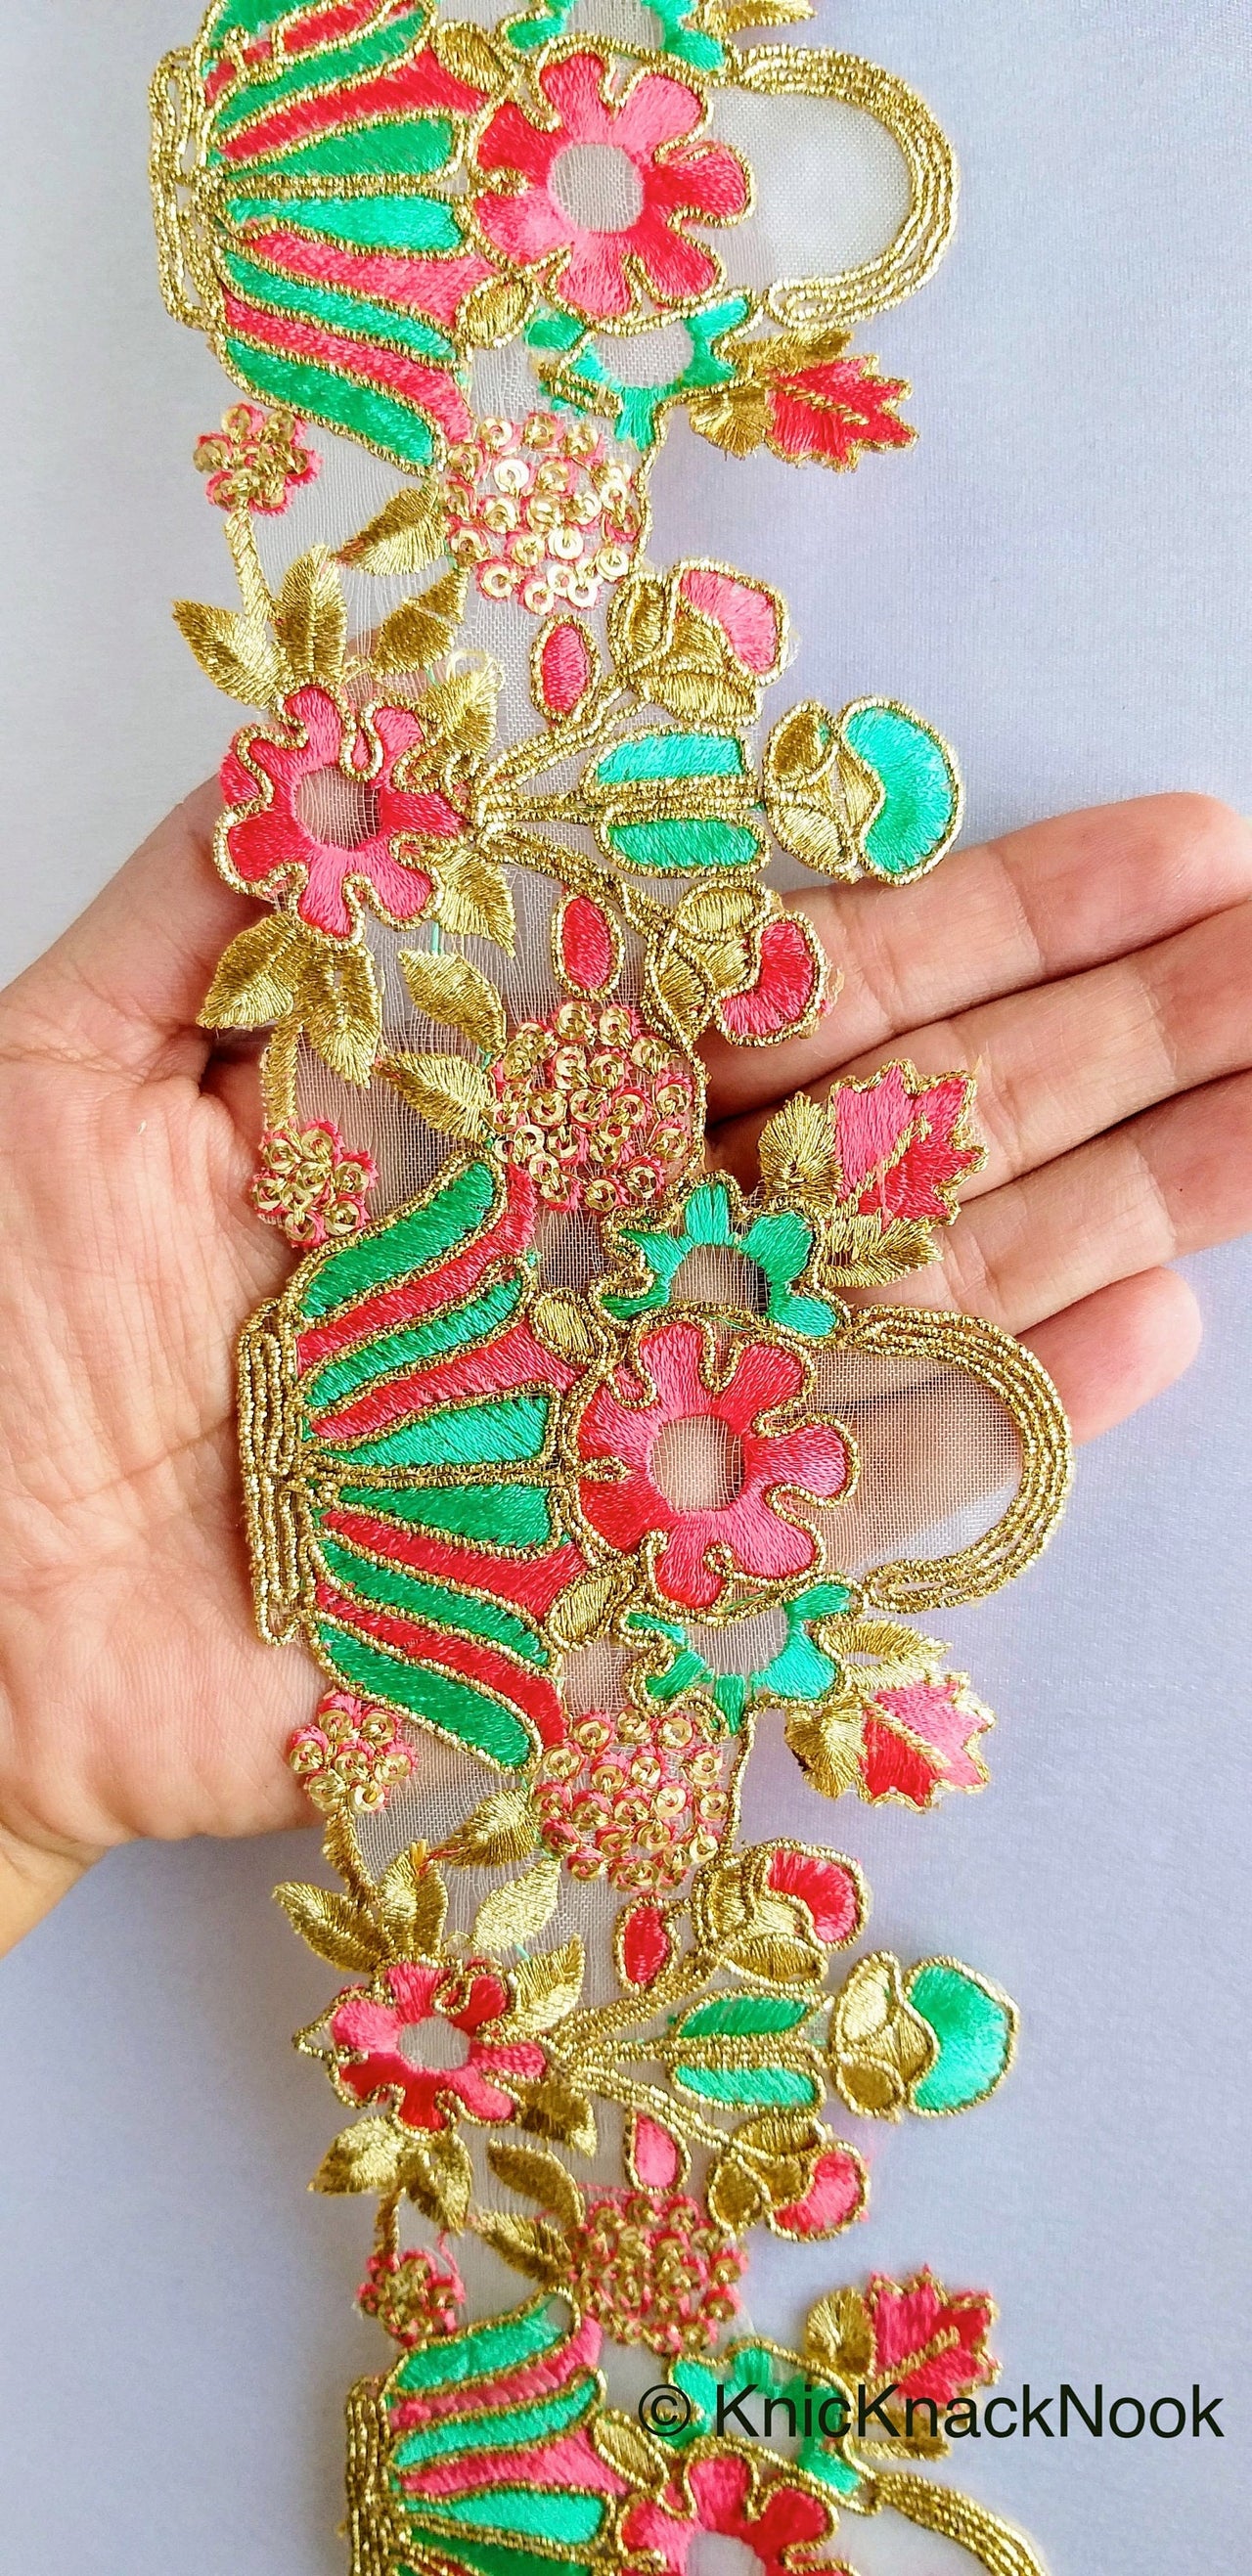 Wholesale Flower Basket Cutwork Trim, Embroidered In Gold, Pink & Green